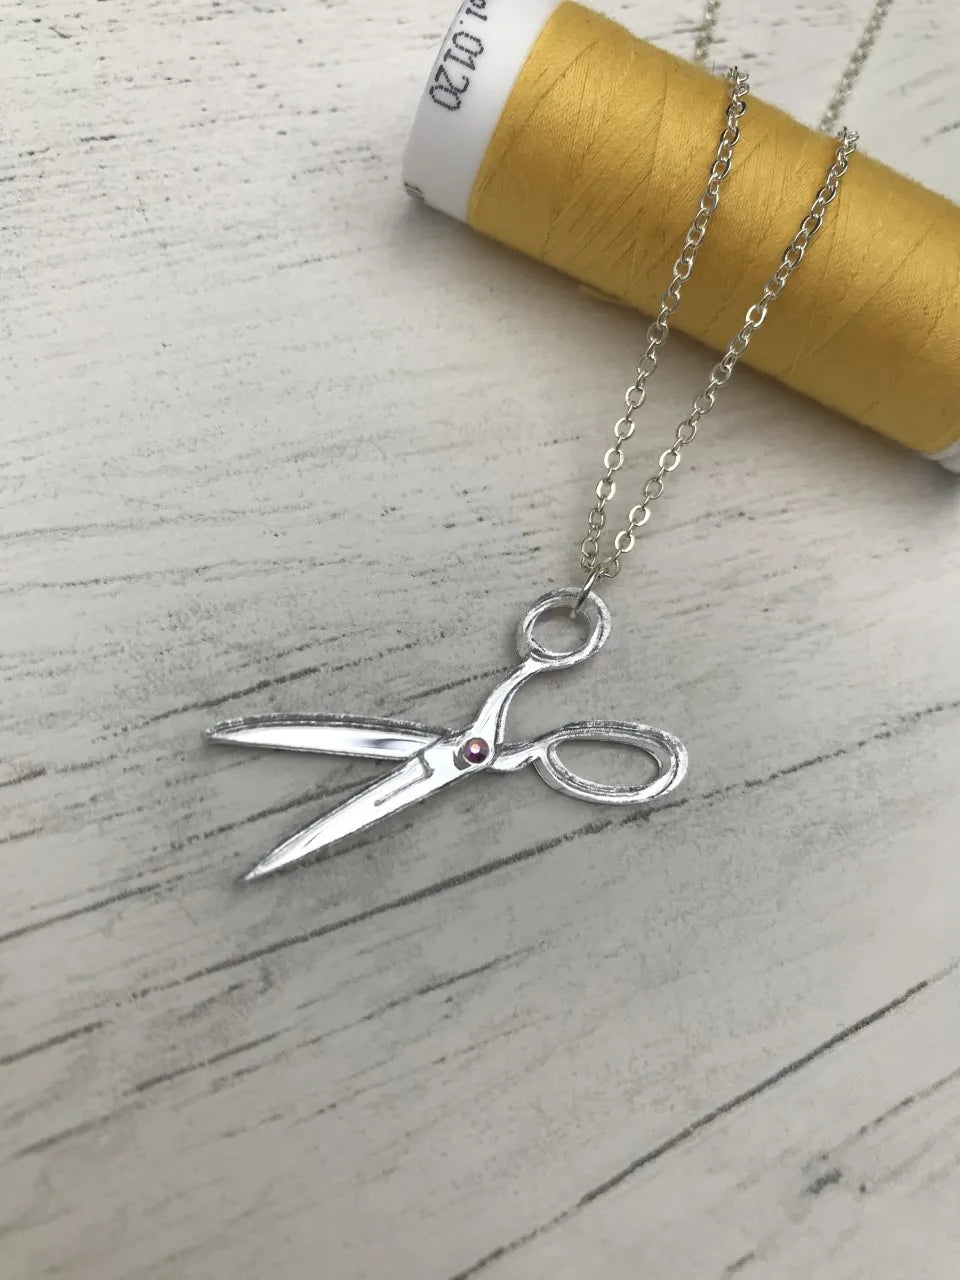 Silver Mirror Acrylic Scissors Necklace | Sew Dainty